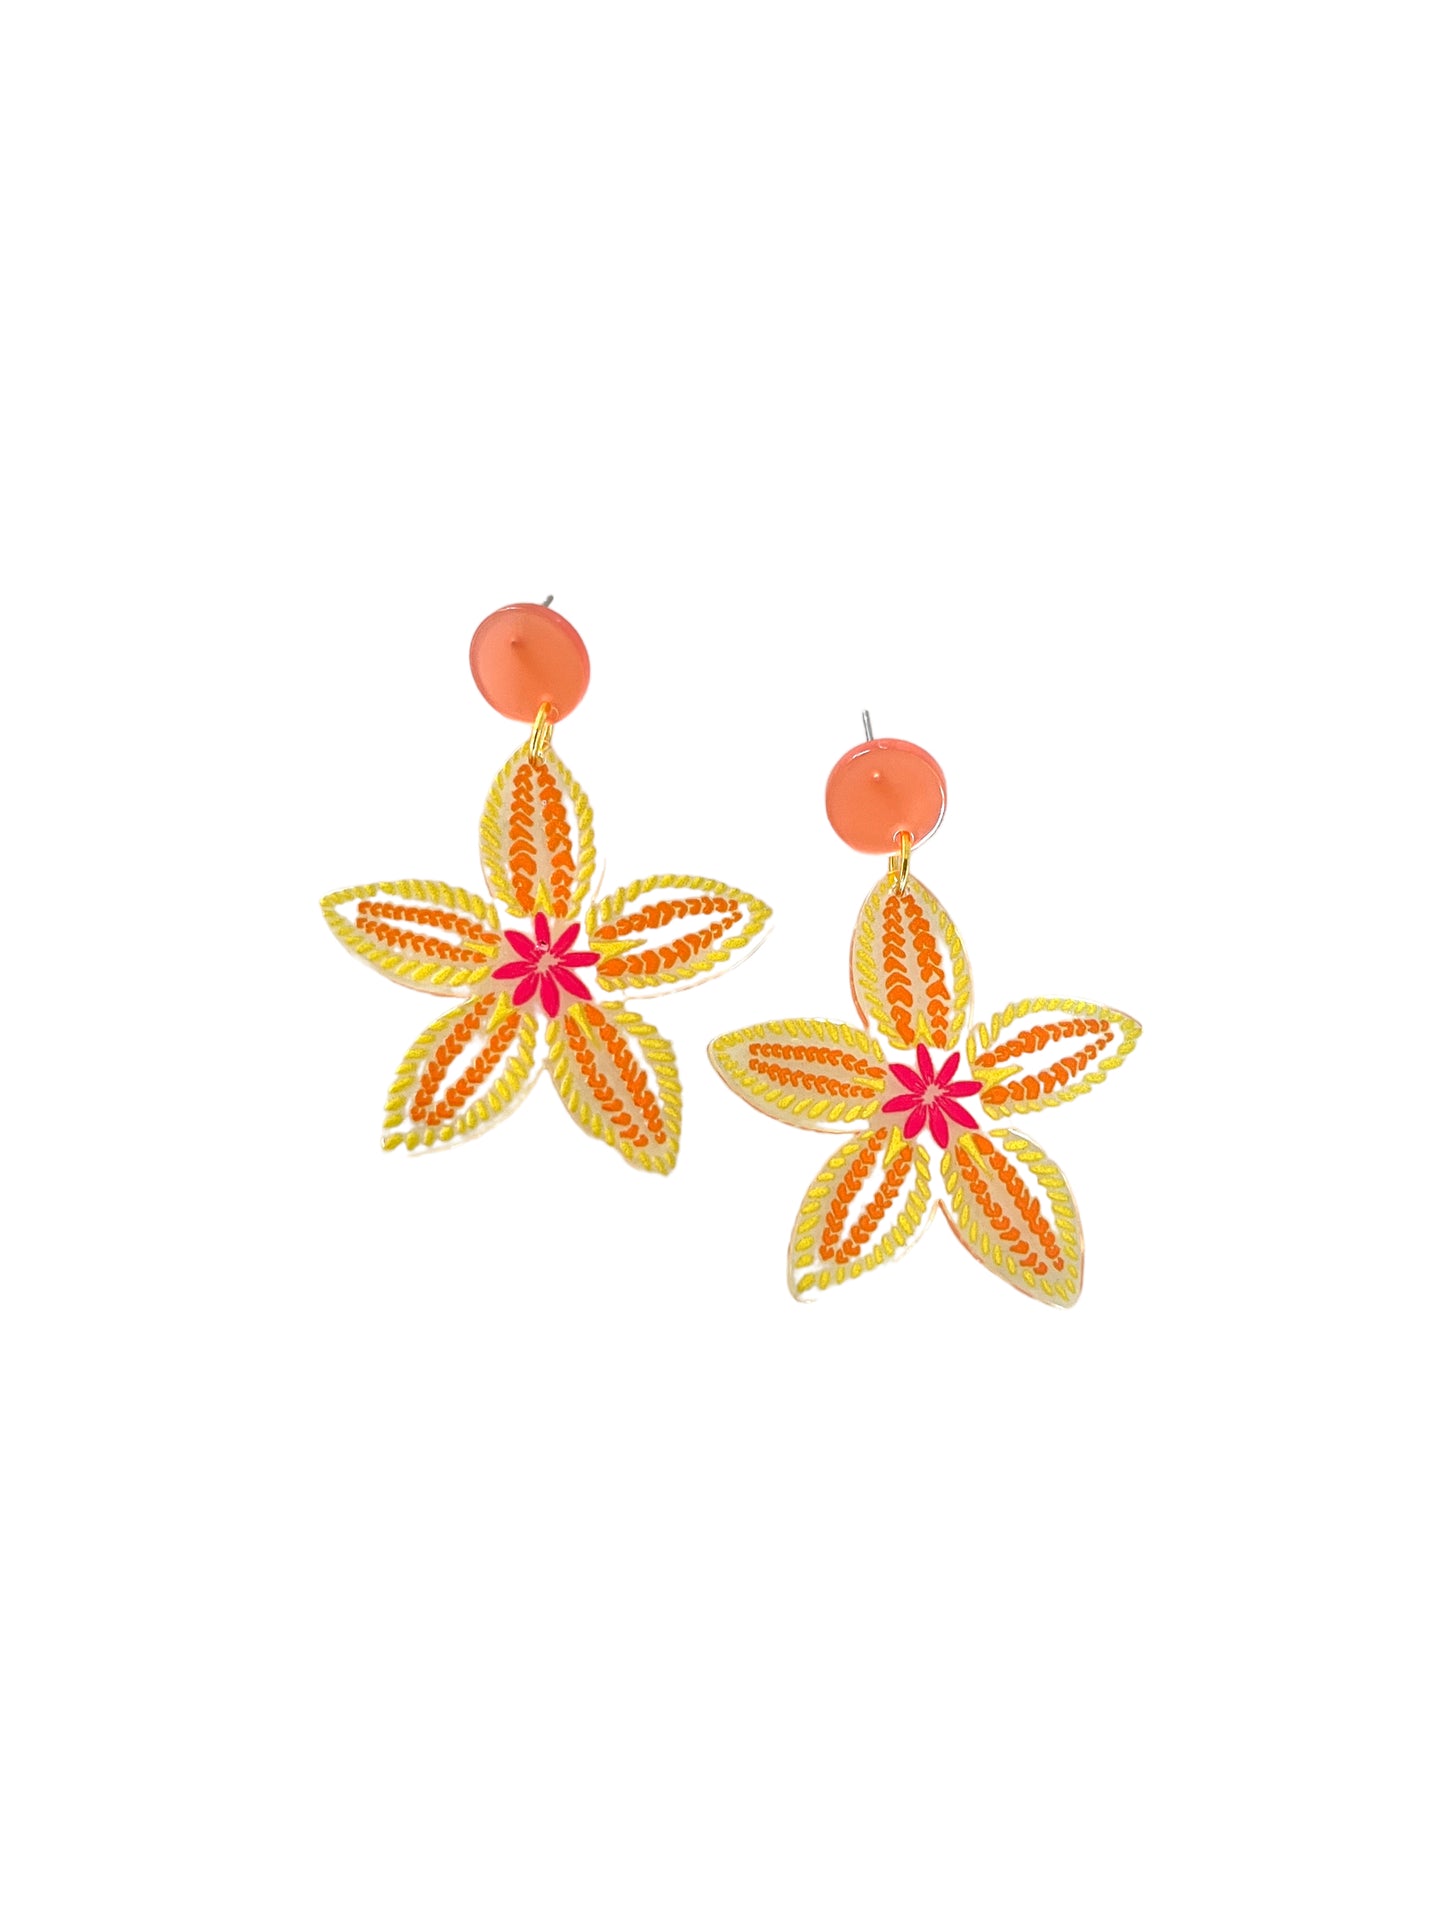 Acrylic Floral Earrings - Yellow